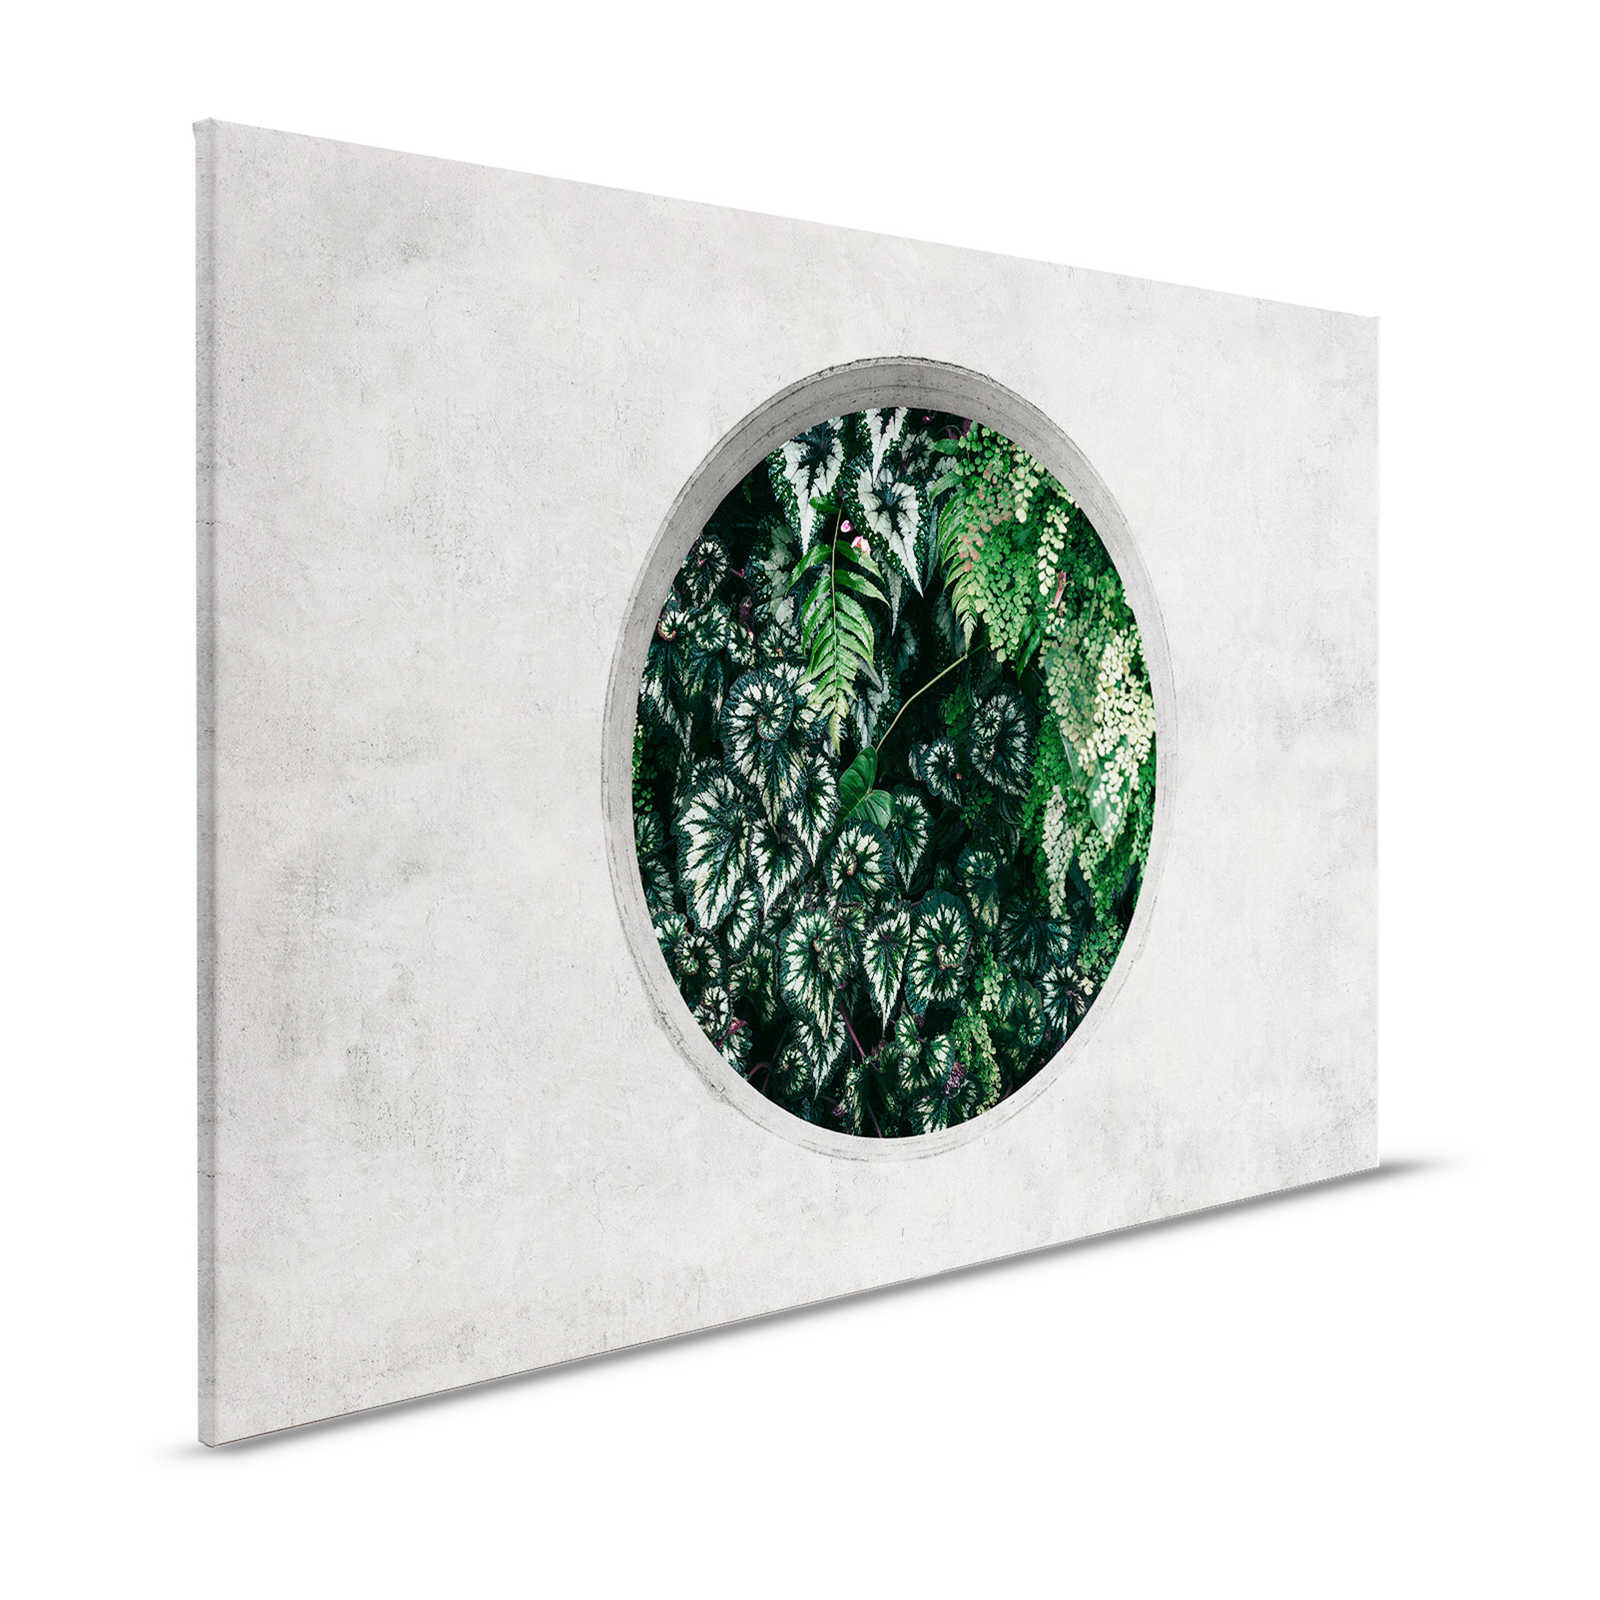 Deep Green 1 - Pintura en lienzo Ventana Redonda con Plantas de Selva - 1,20 m x 0,80 m
